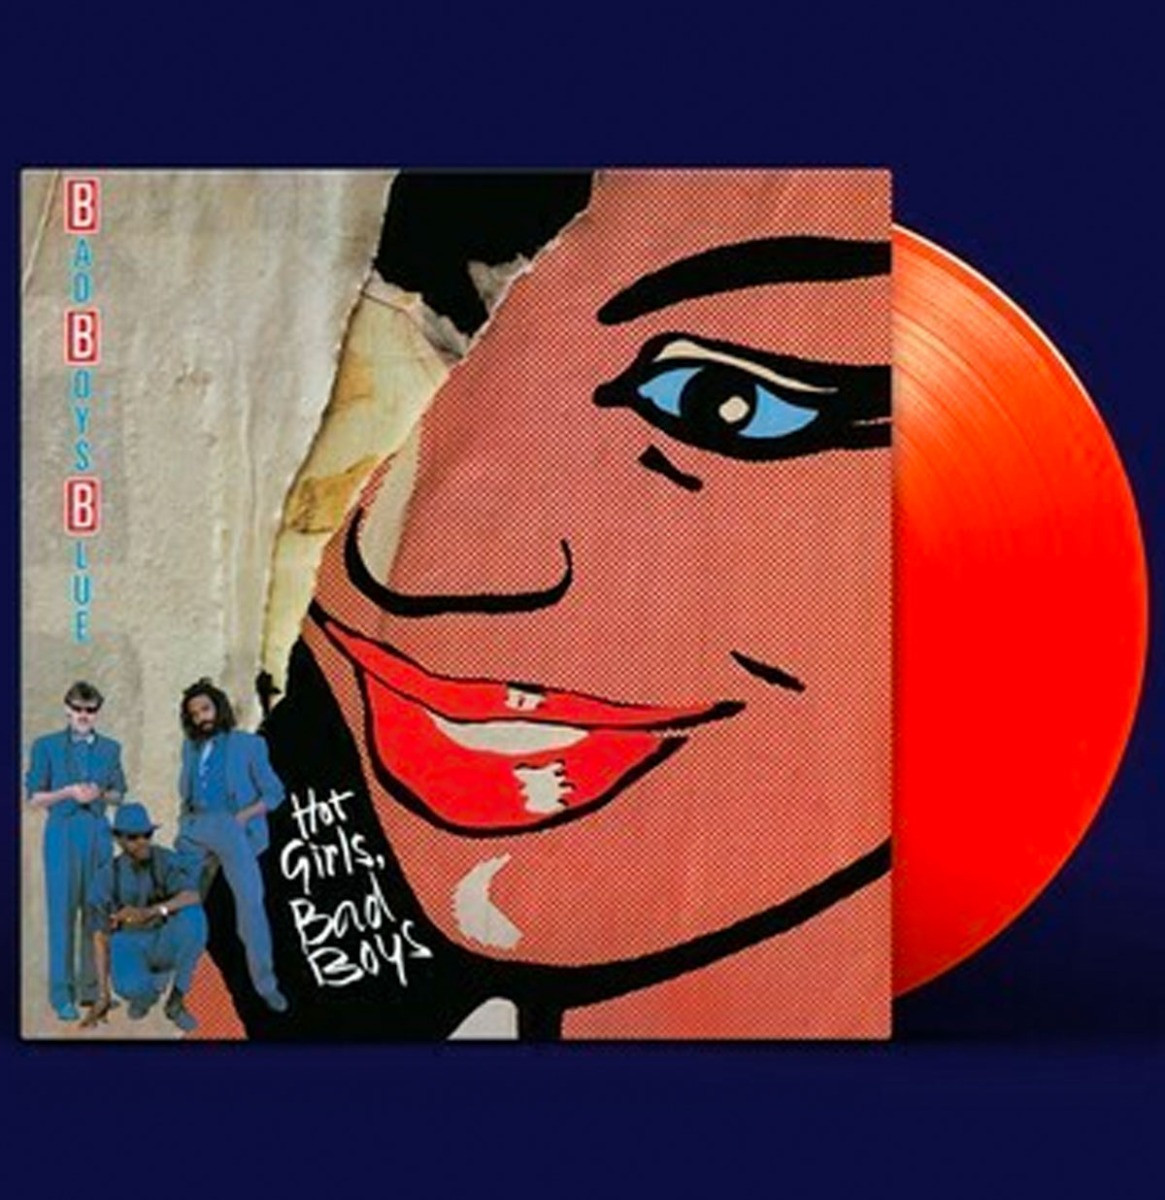 Bad Boys Blue - Hot Girls, Bad Boys LP Oranje Vinyl ZEER GELIMITEERD